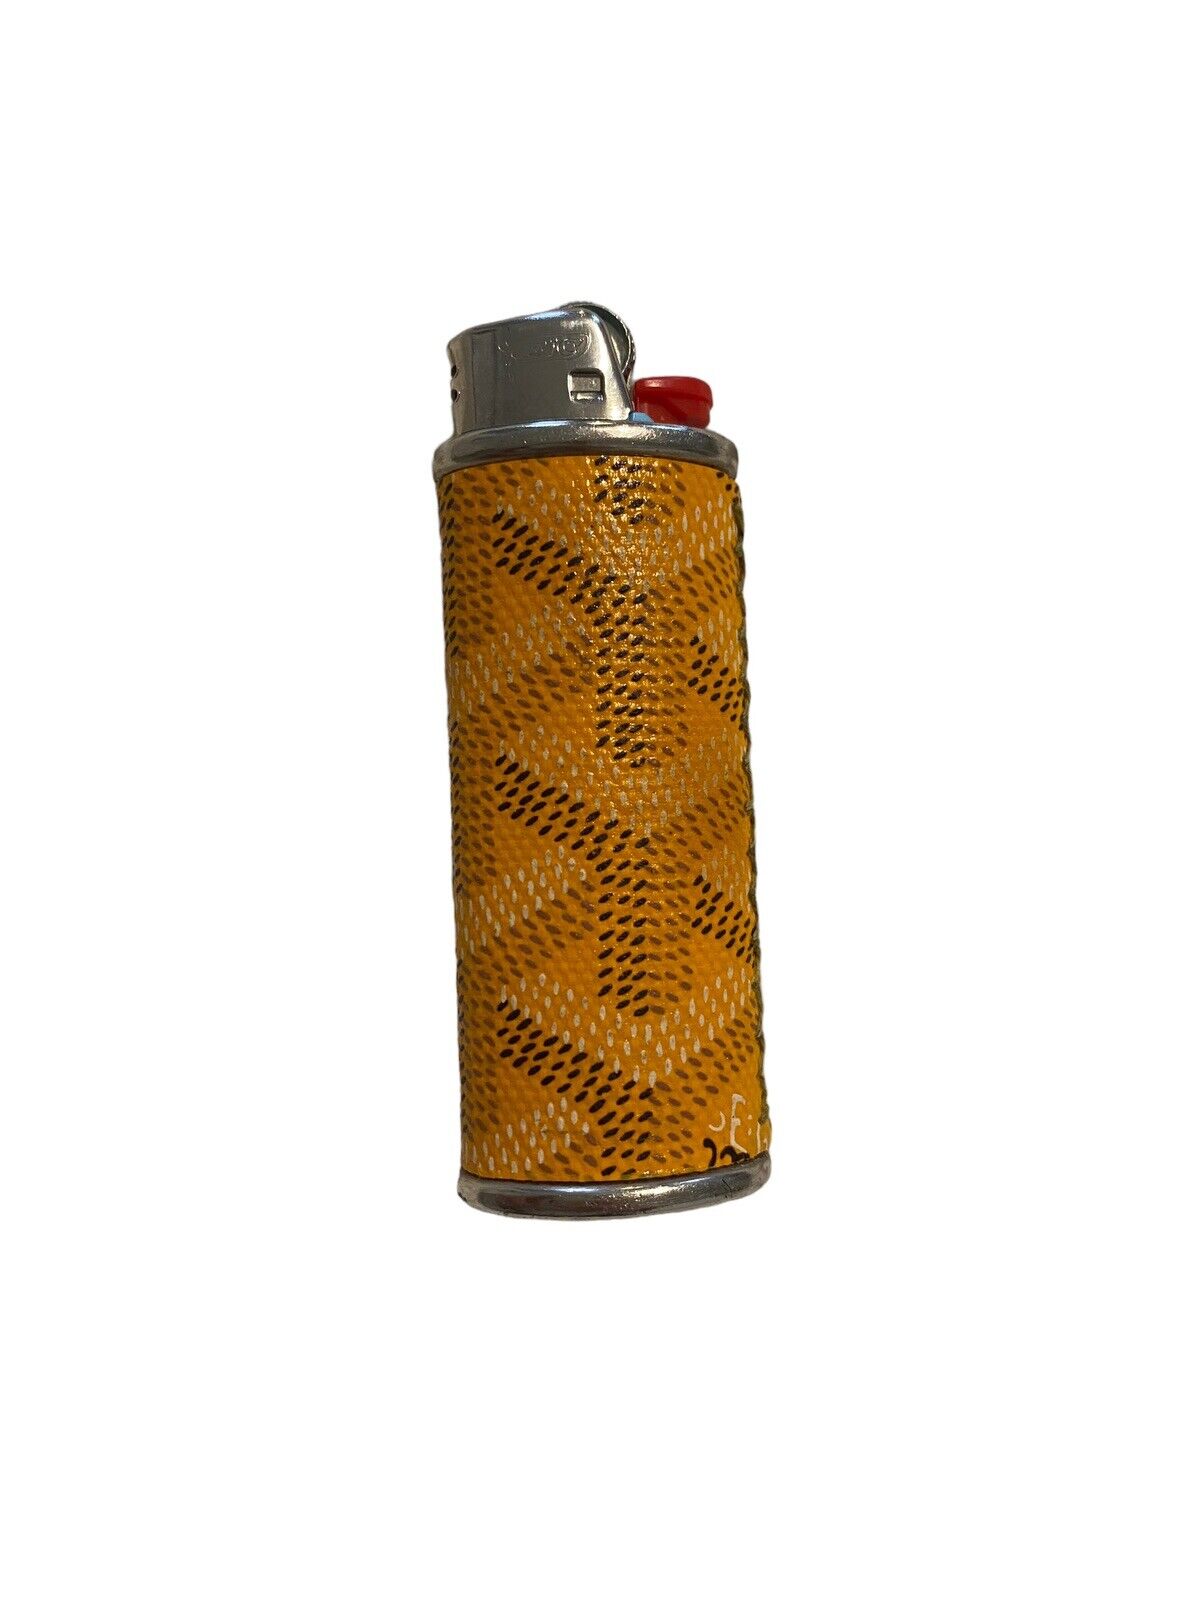 Authentic Etai Drori Yellow Goyard Lighter Case Excellent Condition